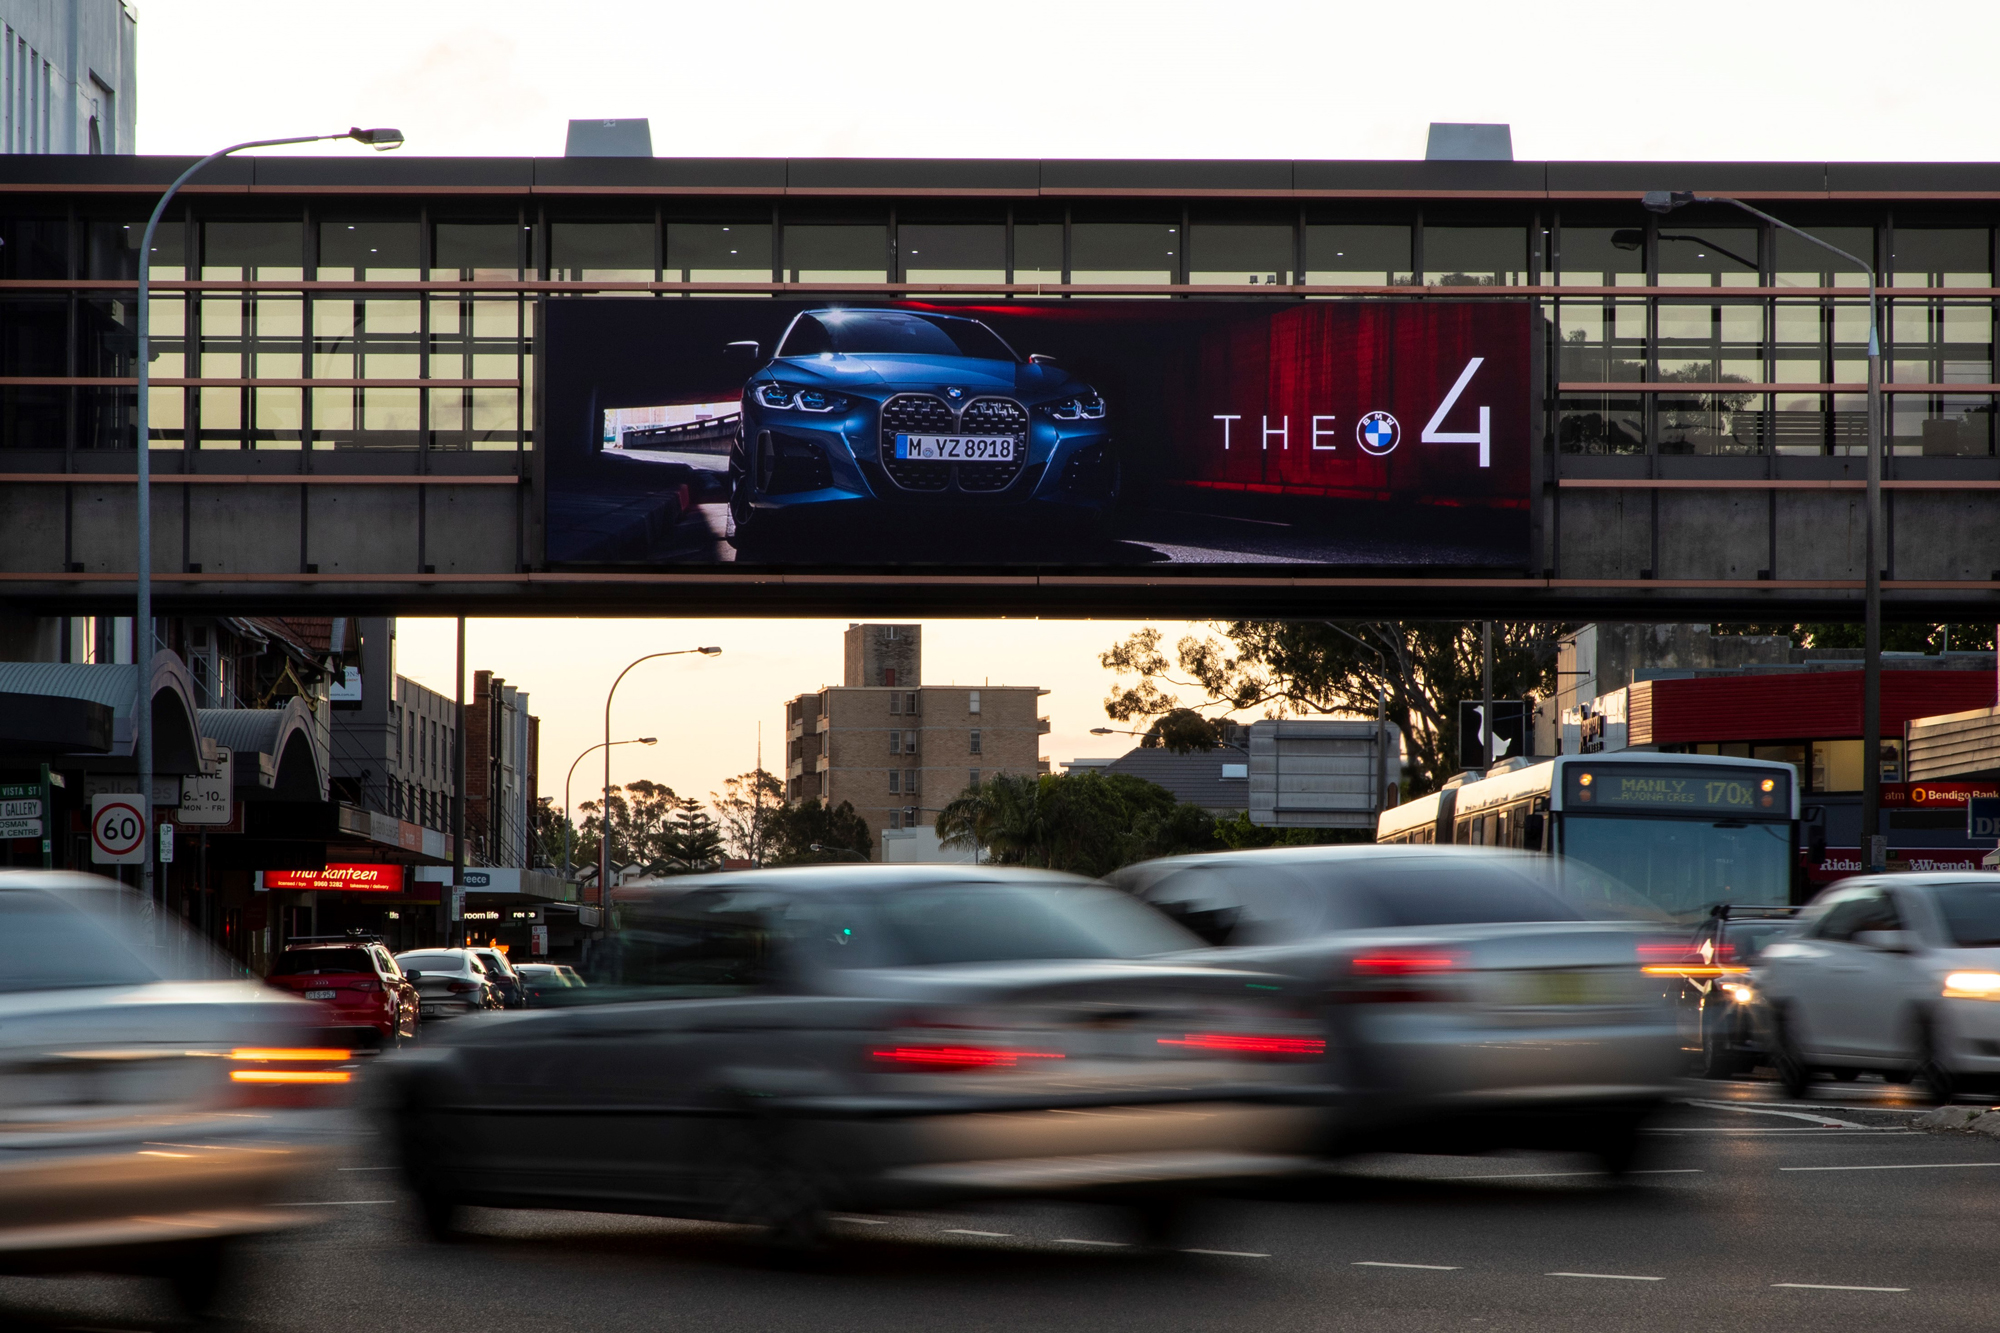 Mosman Billboard advertising as oOh!media launches Audience Intelligence Hub